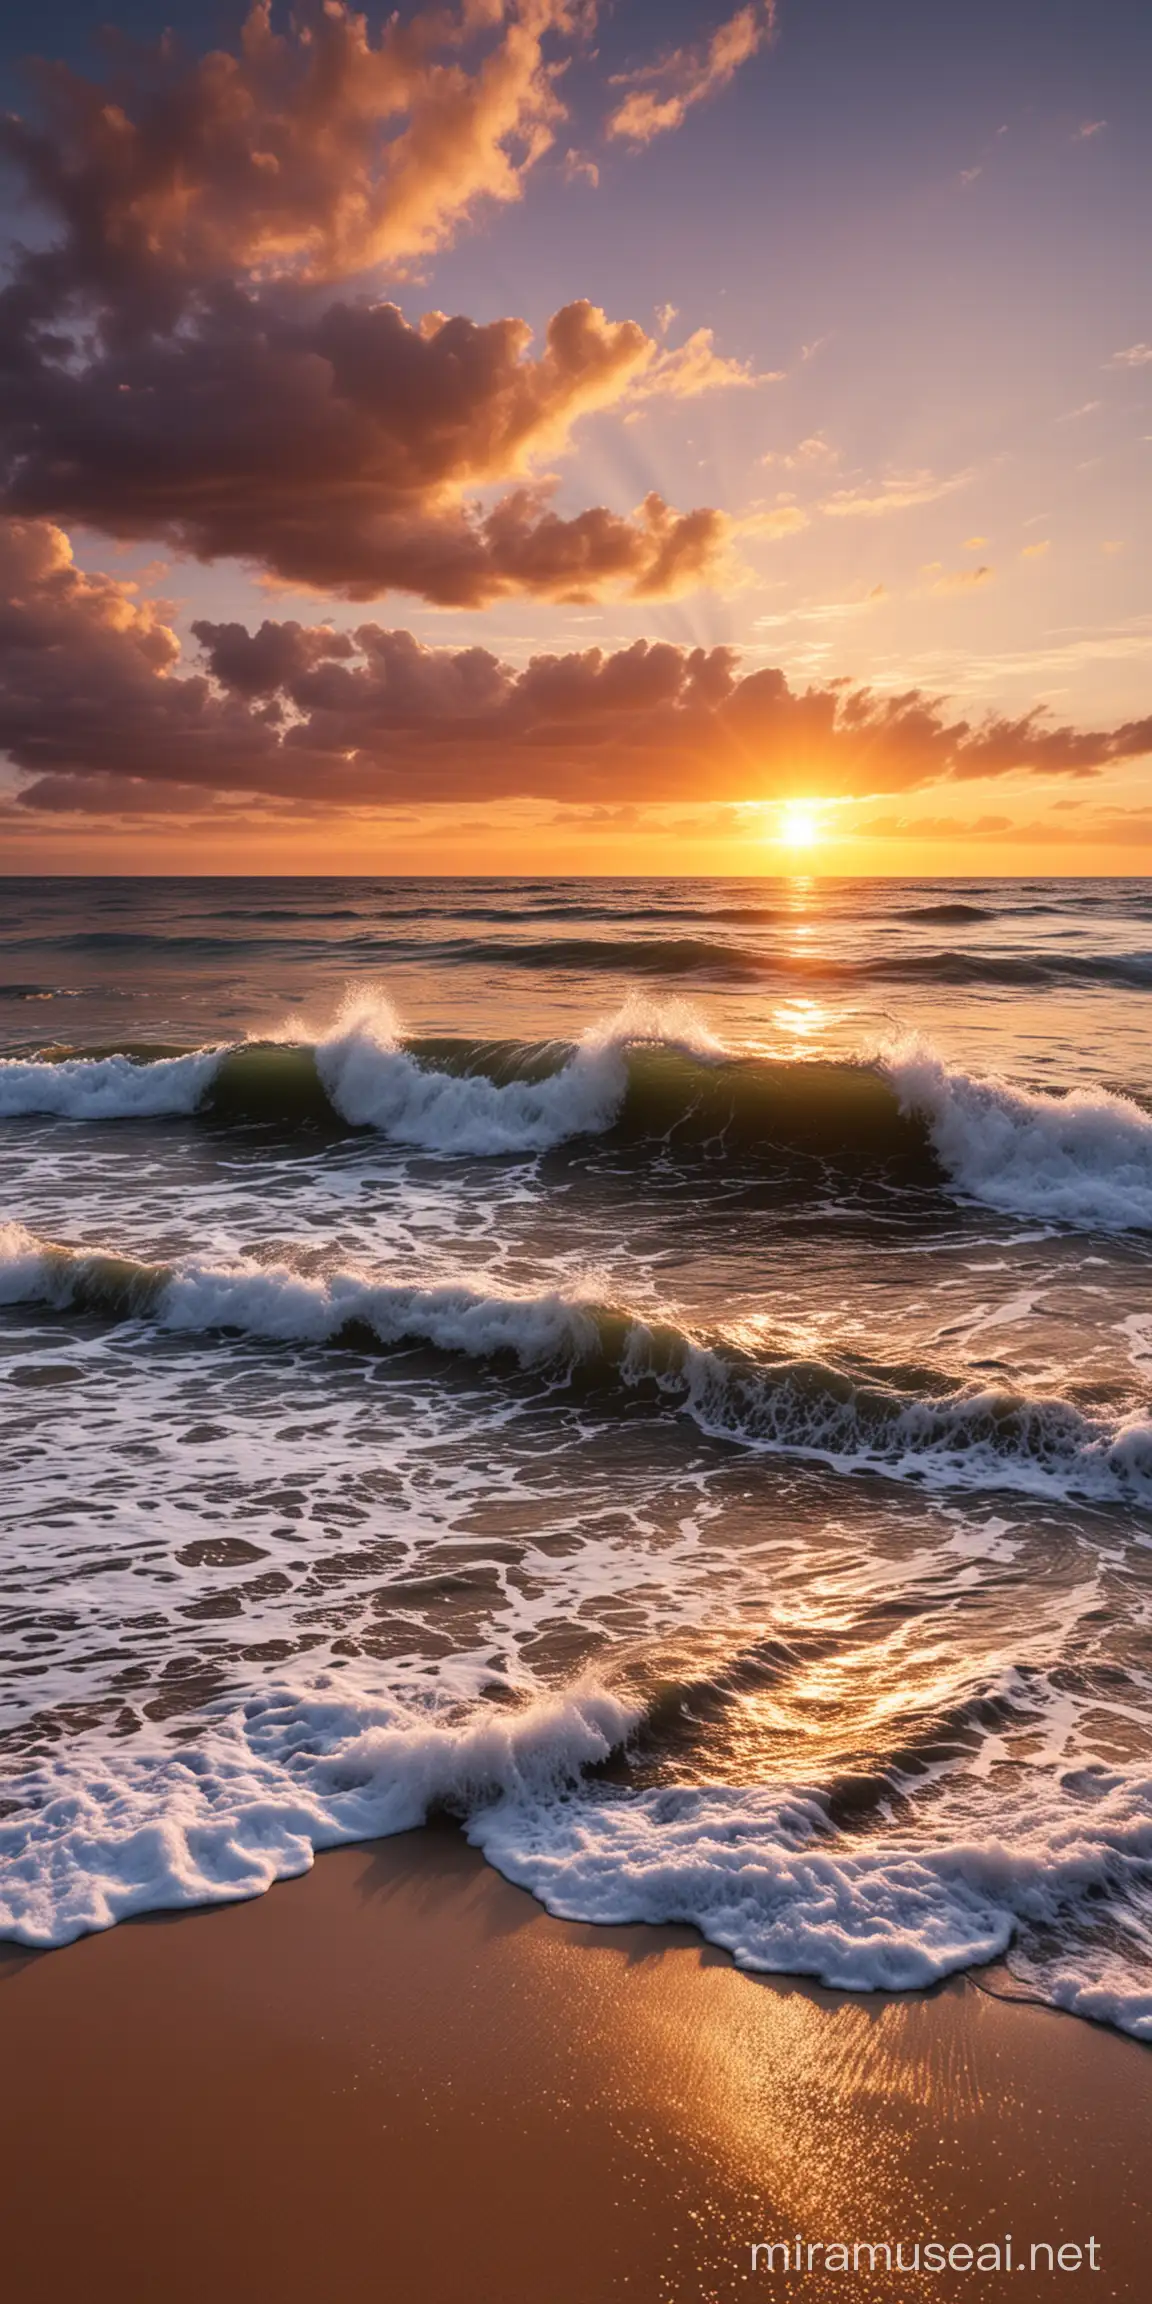 Serene Beach Sunset with Crashing Waves